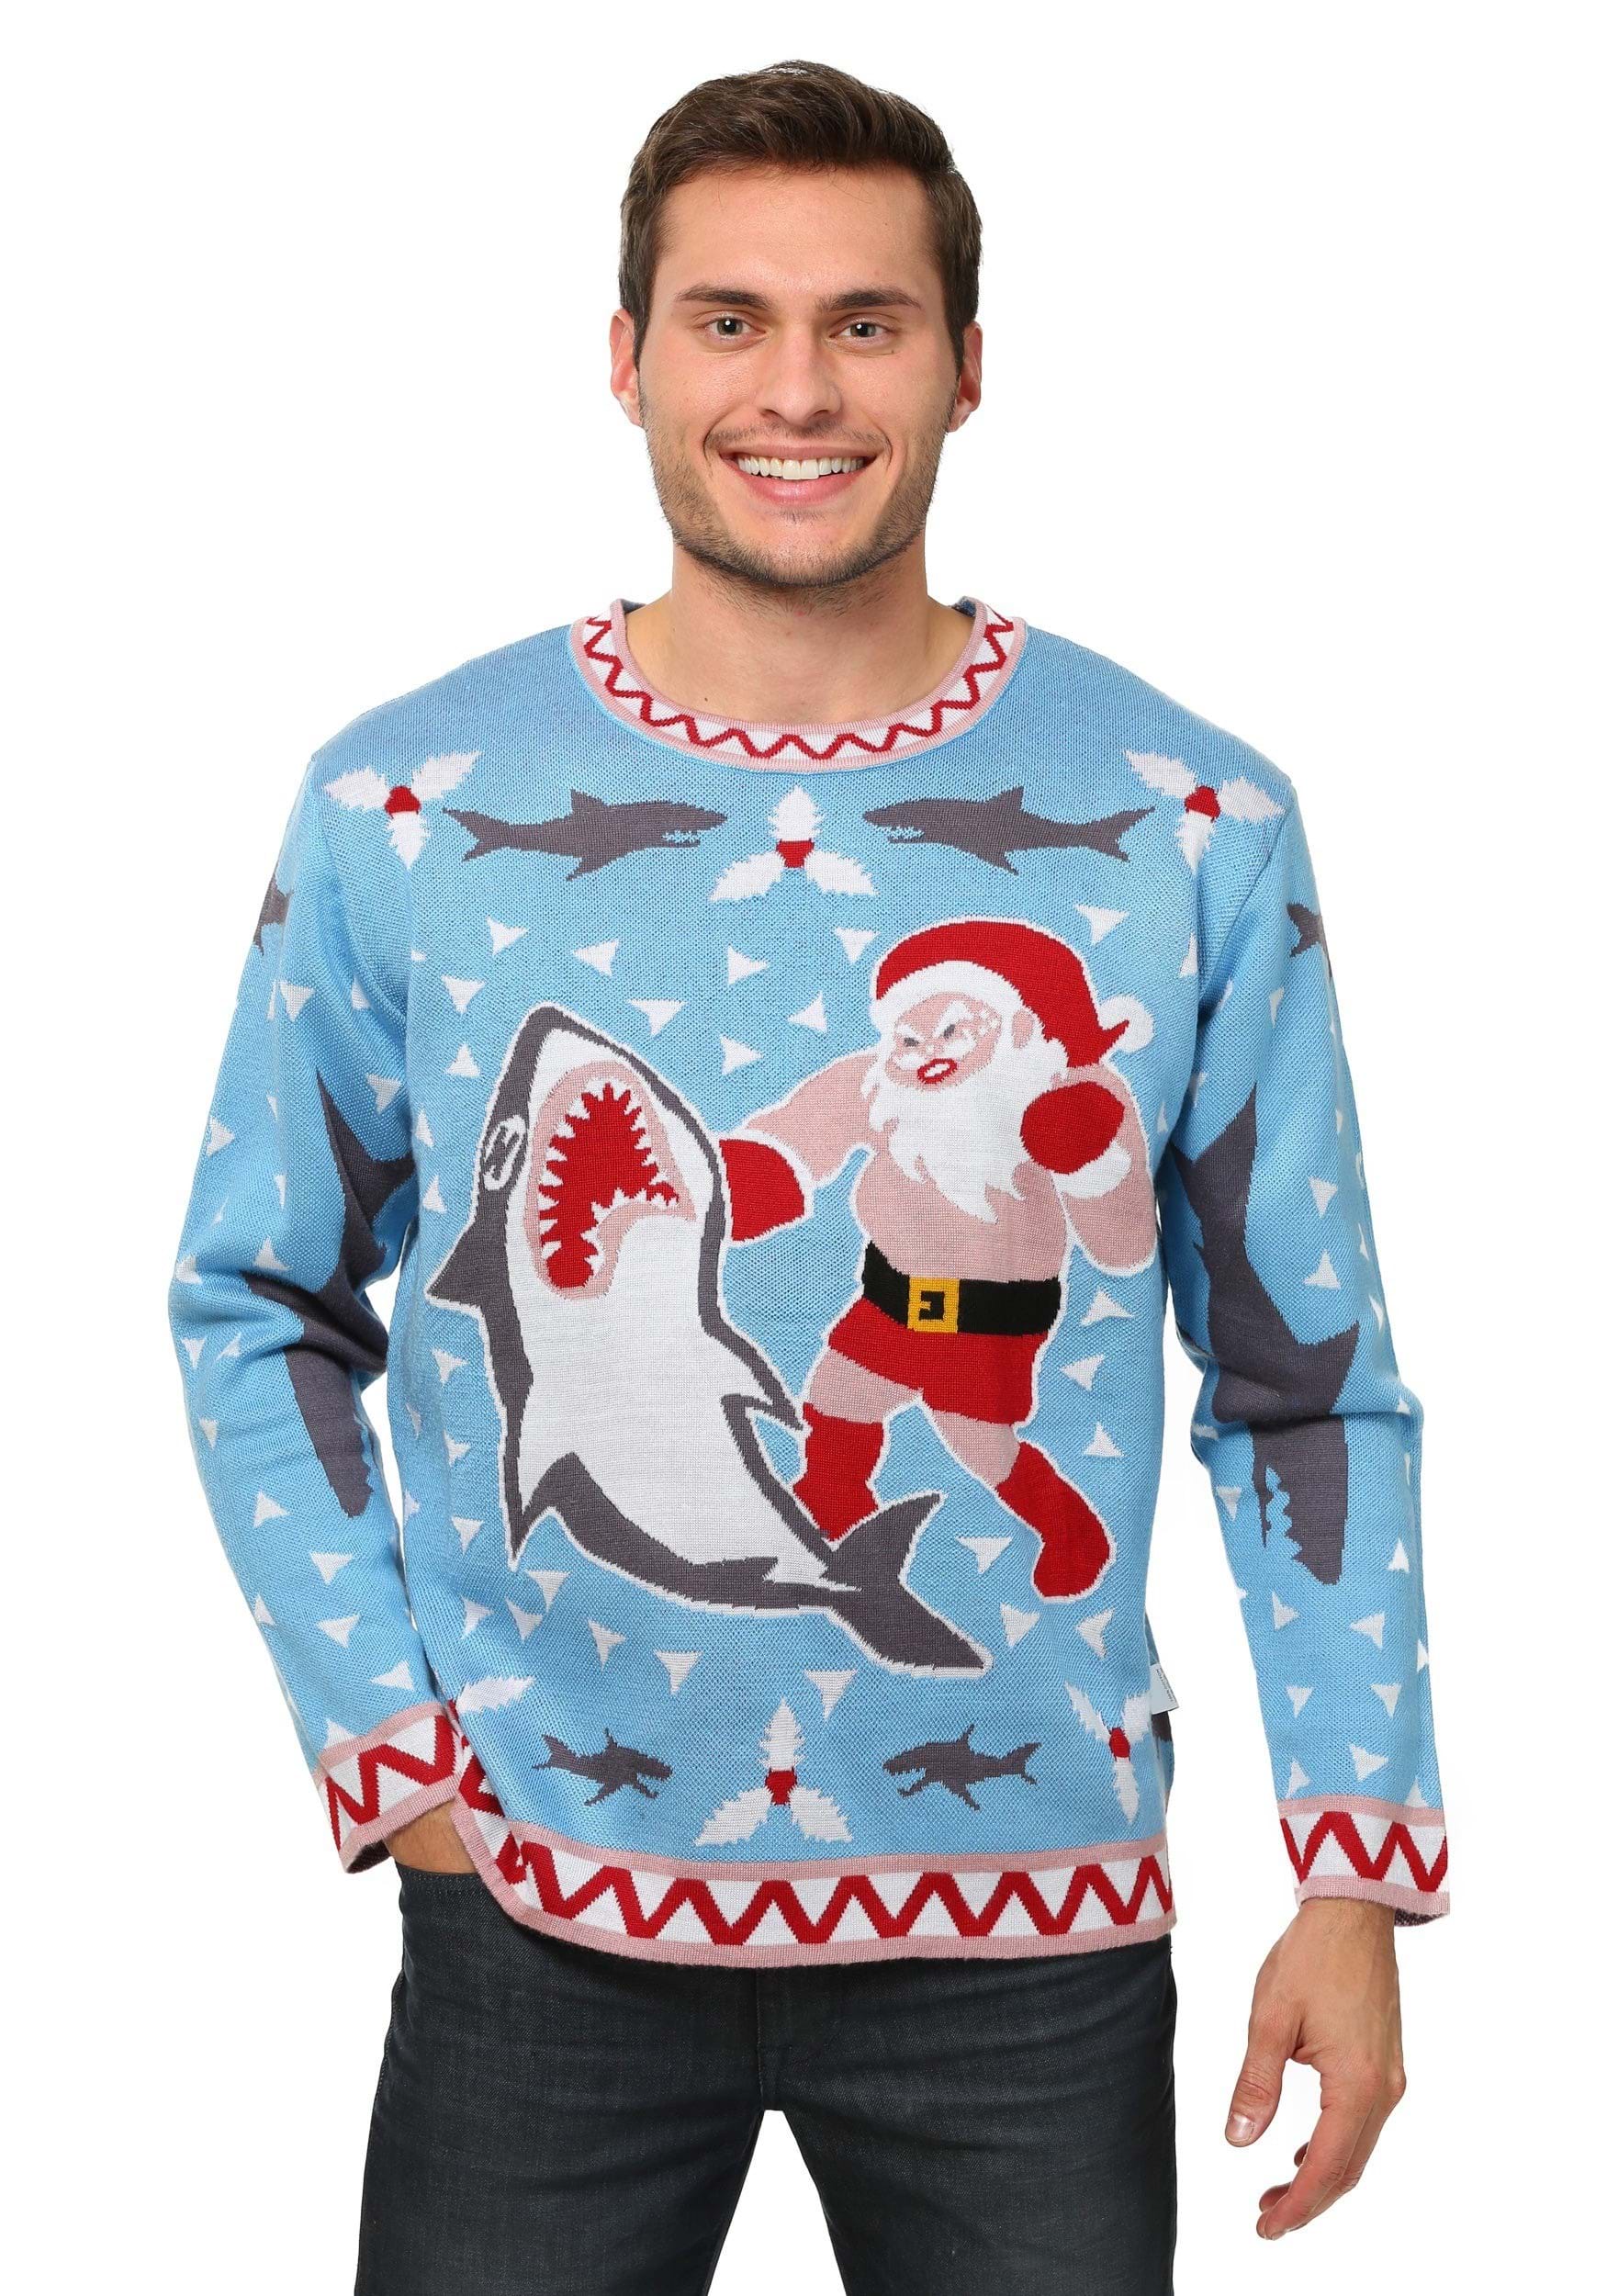 https://images.fun.com/products/36401/2-1-259245/mens-santa-vs-shark-christmas-sweater-alt-3.jpg